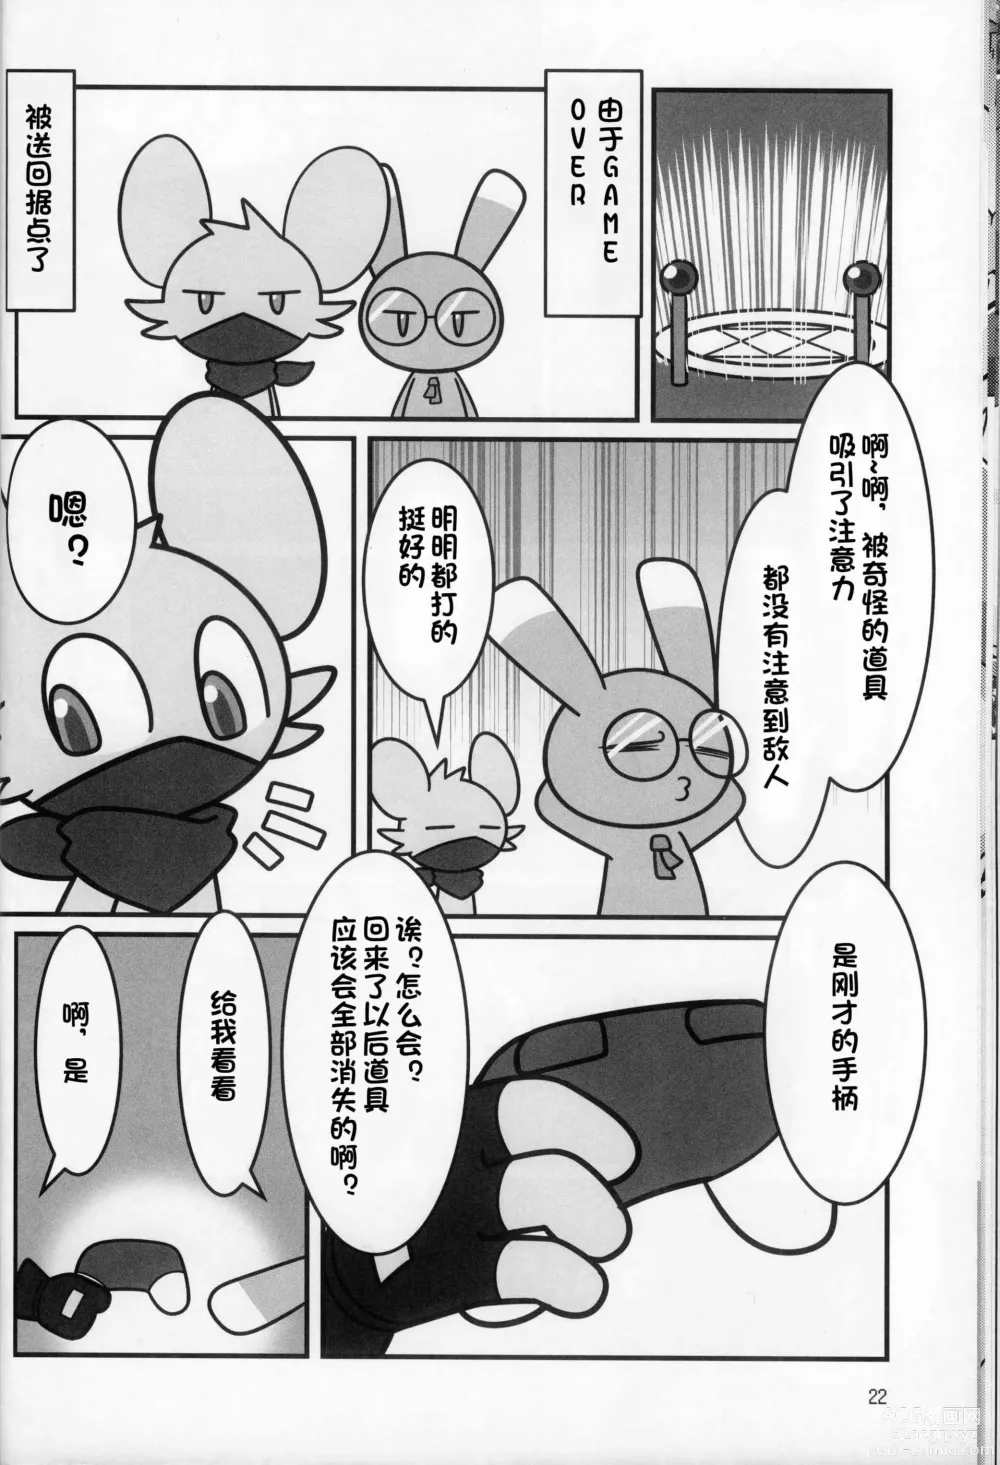 Page 22 of doujinshi 低头身Q版吉祥物 vol.8 Type-Z